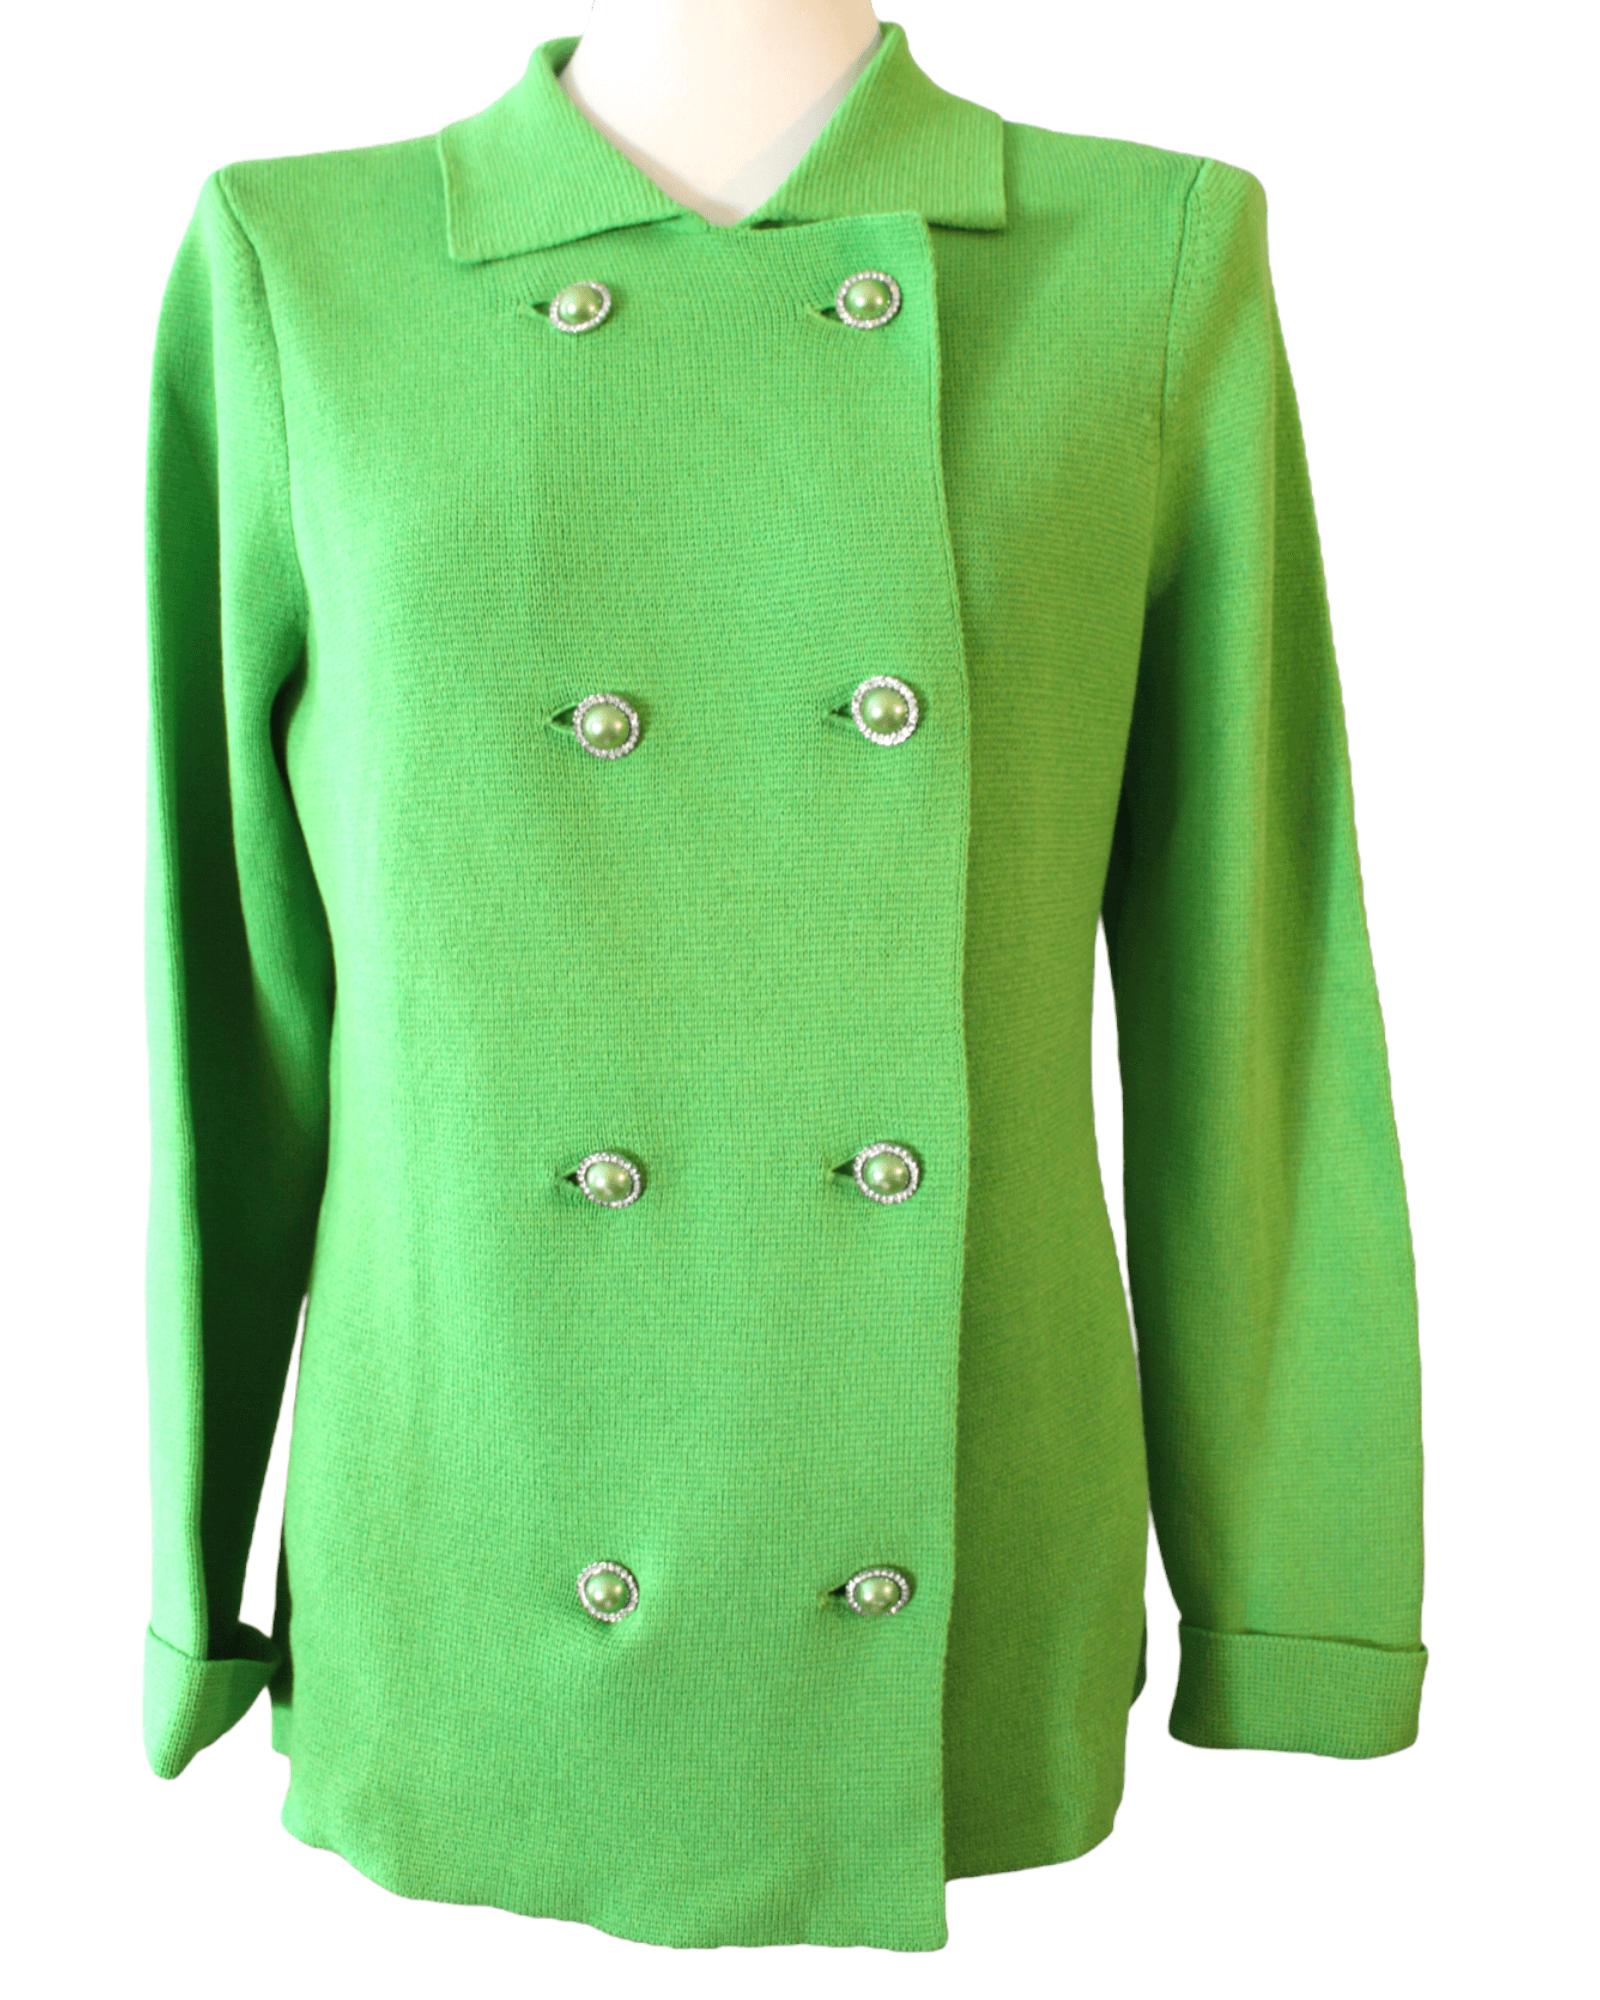 Bright Spring BLOOMINGDALES green sweater jacket